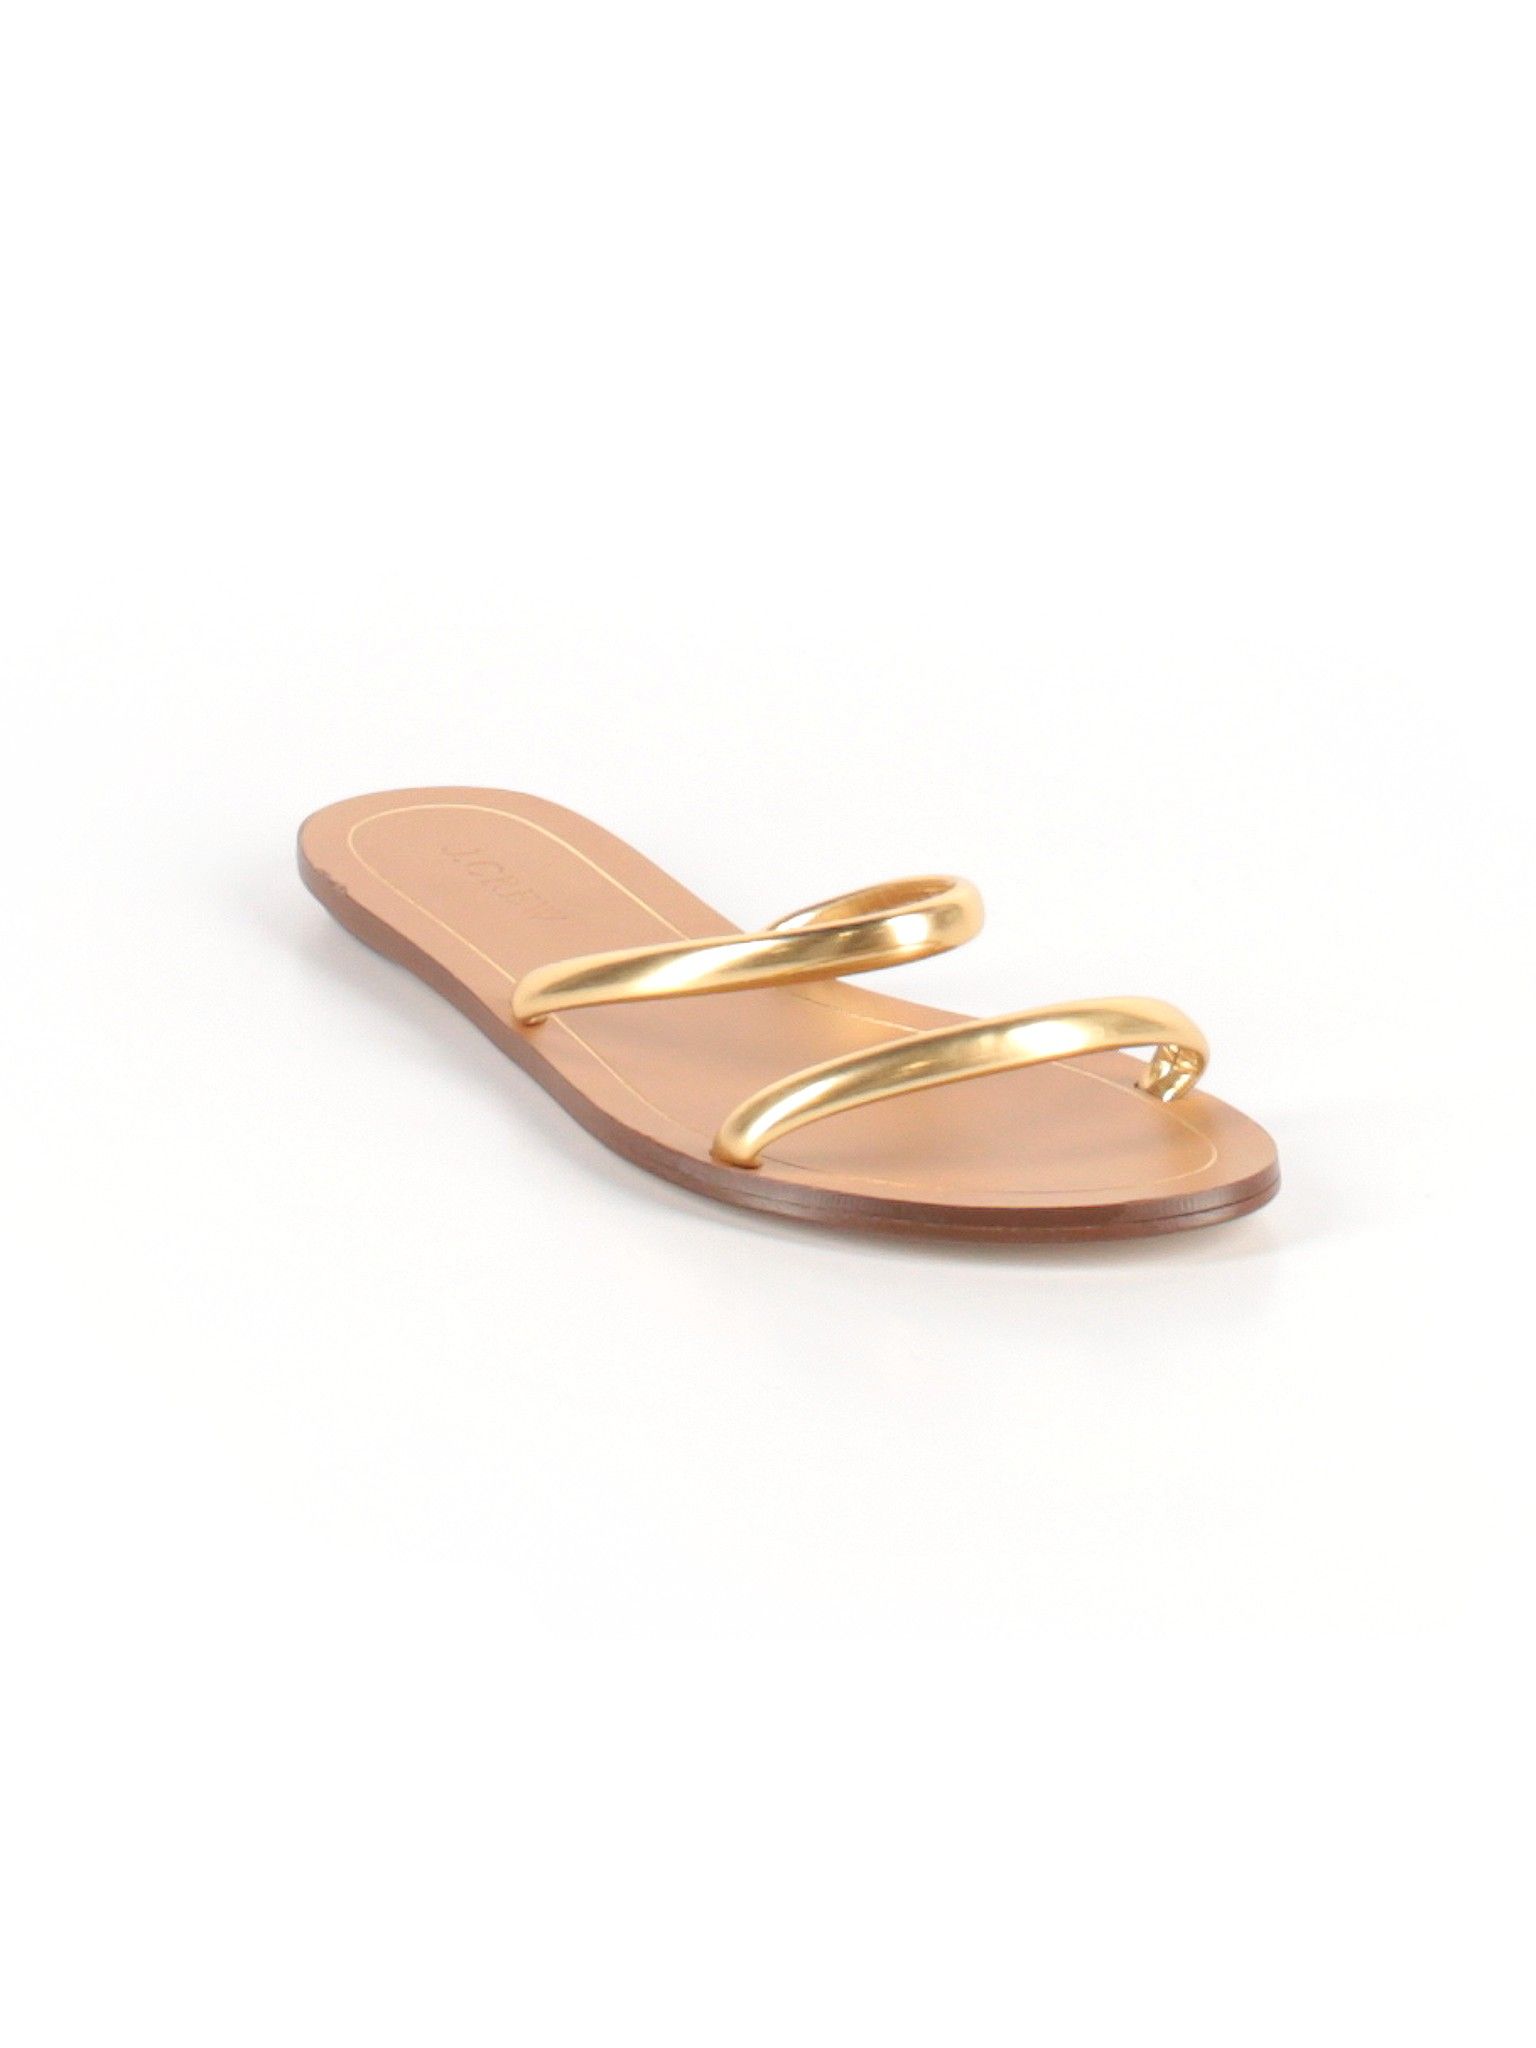 J. Crew Sandals Size 7: Gold Women's Clothing - 38502992 | thredUP